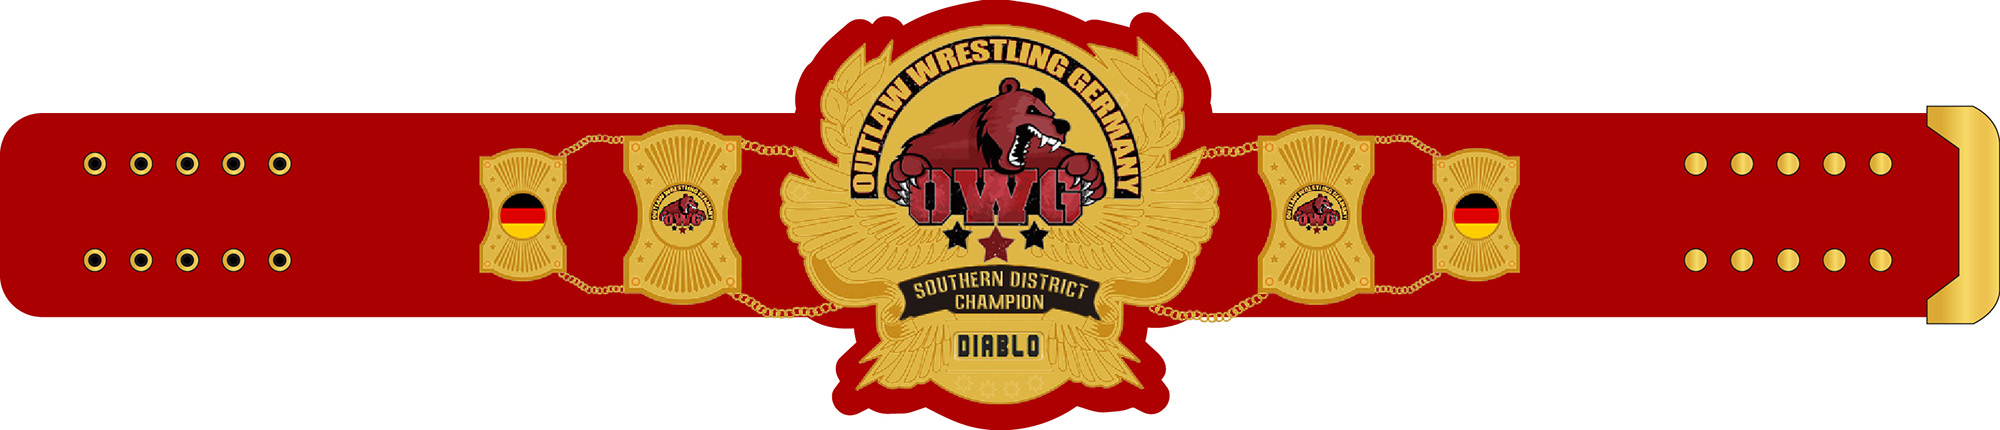 OWG Outlaw Wrestling Germany Southern District Wrestling Champion Grtel